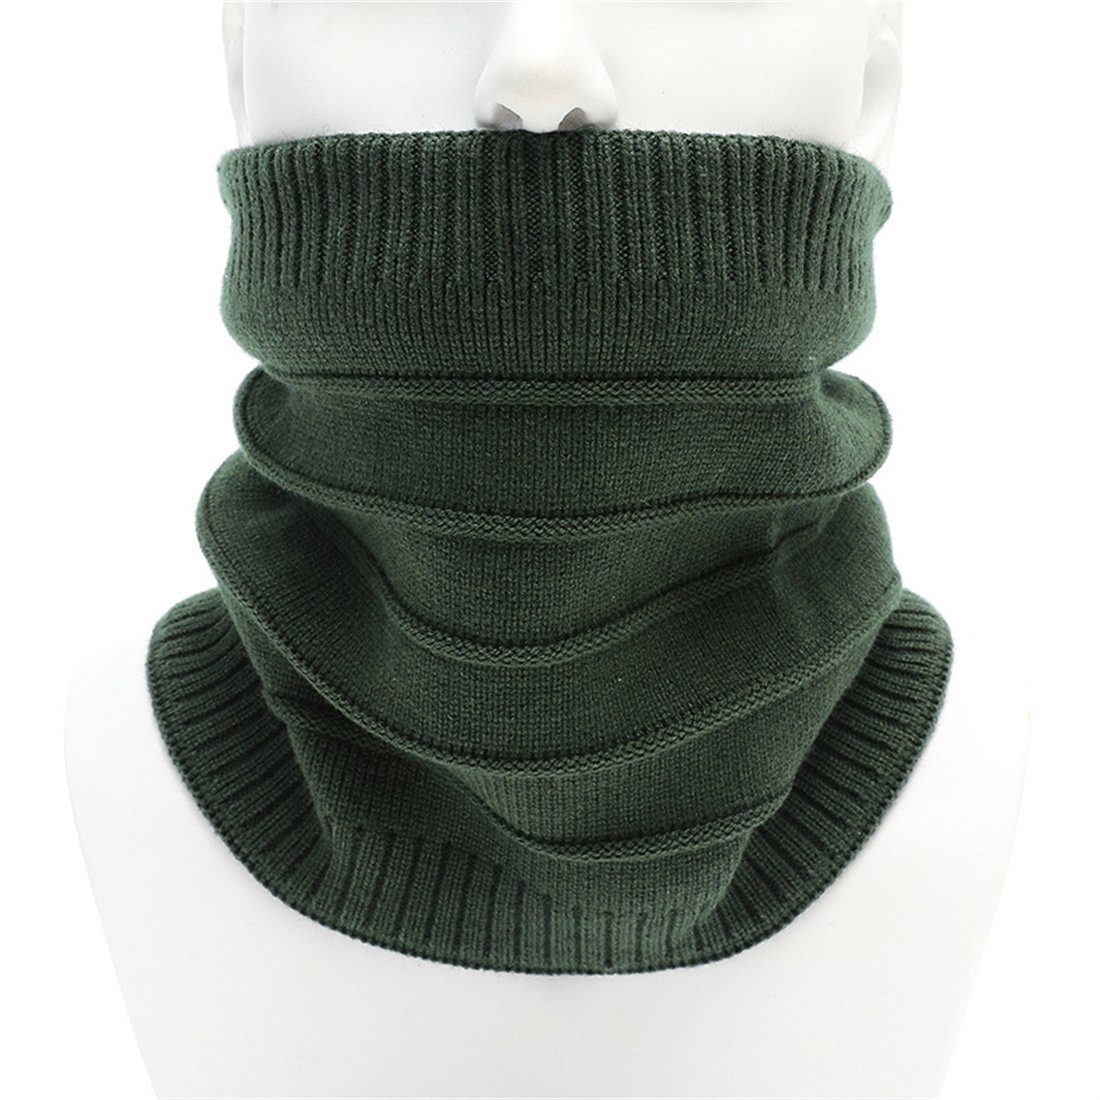 gestreifter Halsbedeckung Modeschal gestrickte grün Schal, warmer DÖRÖY einfarbiger Unisex